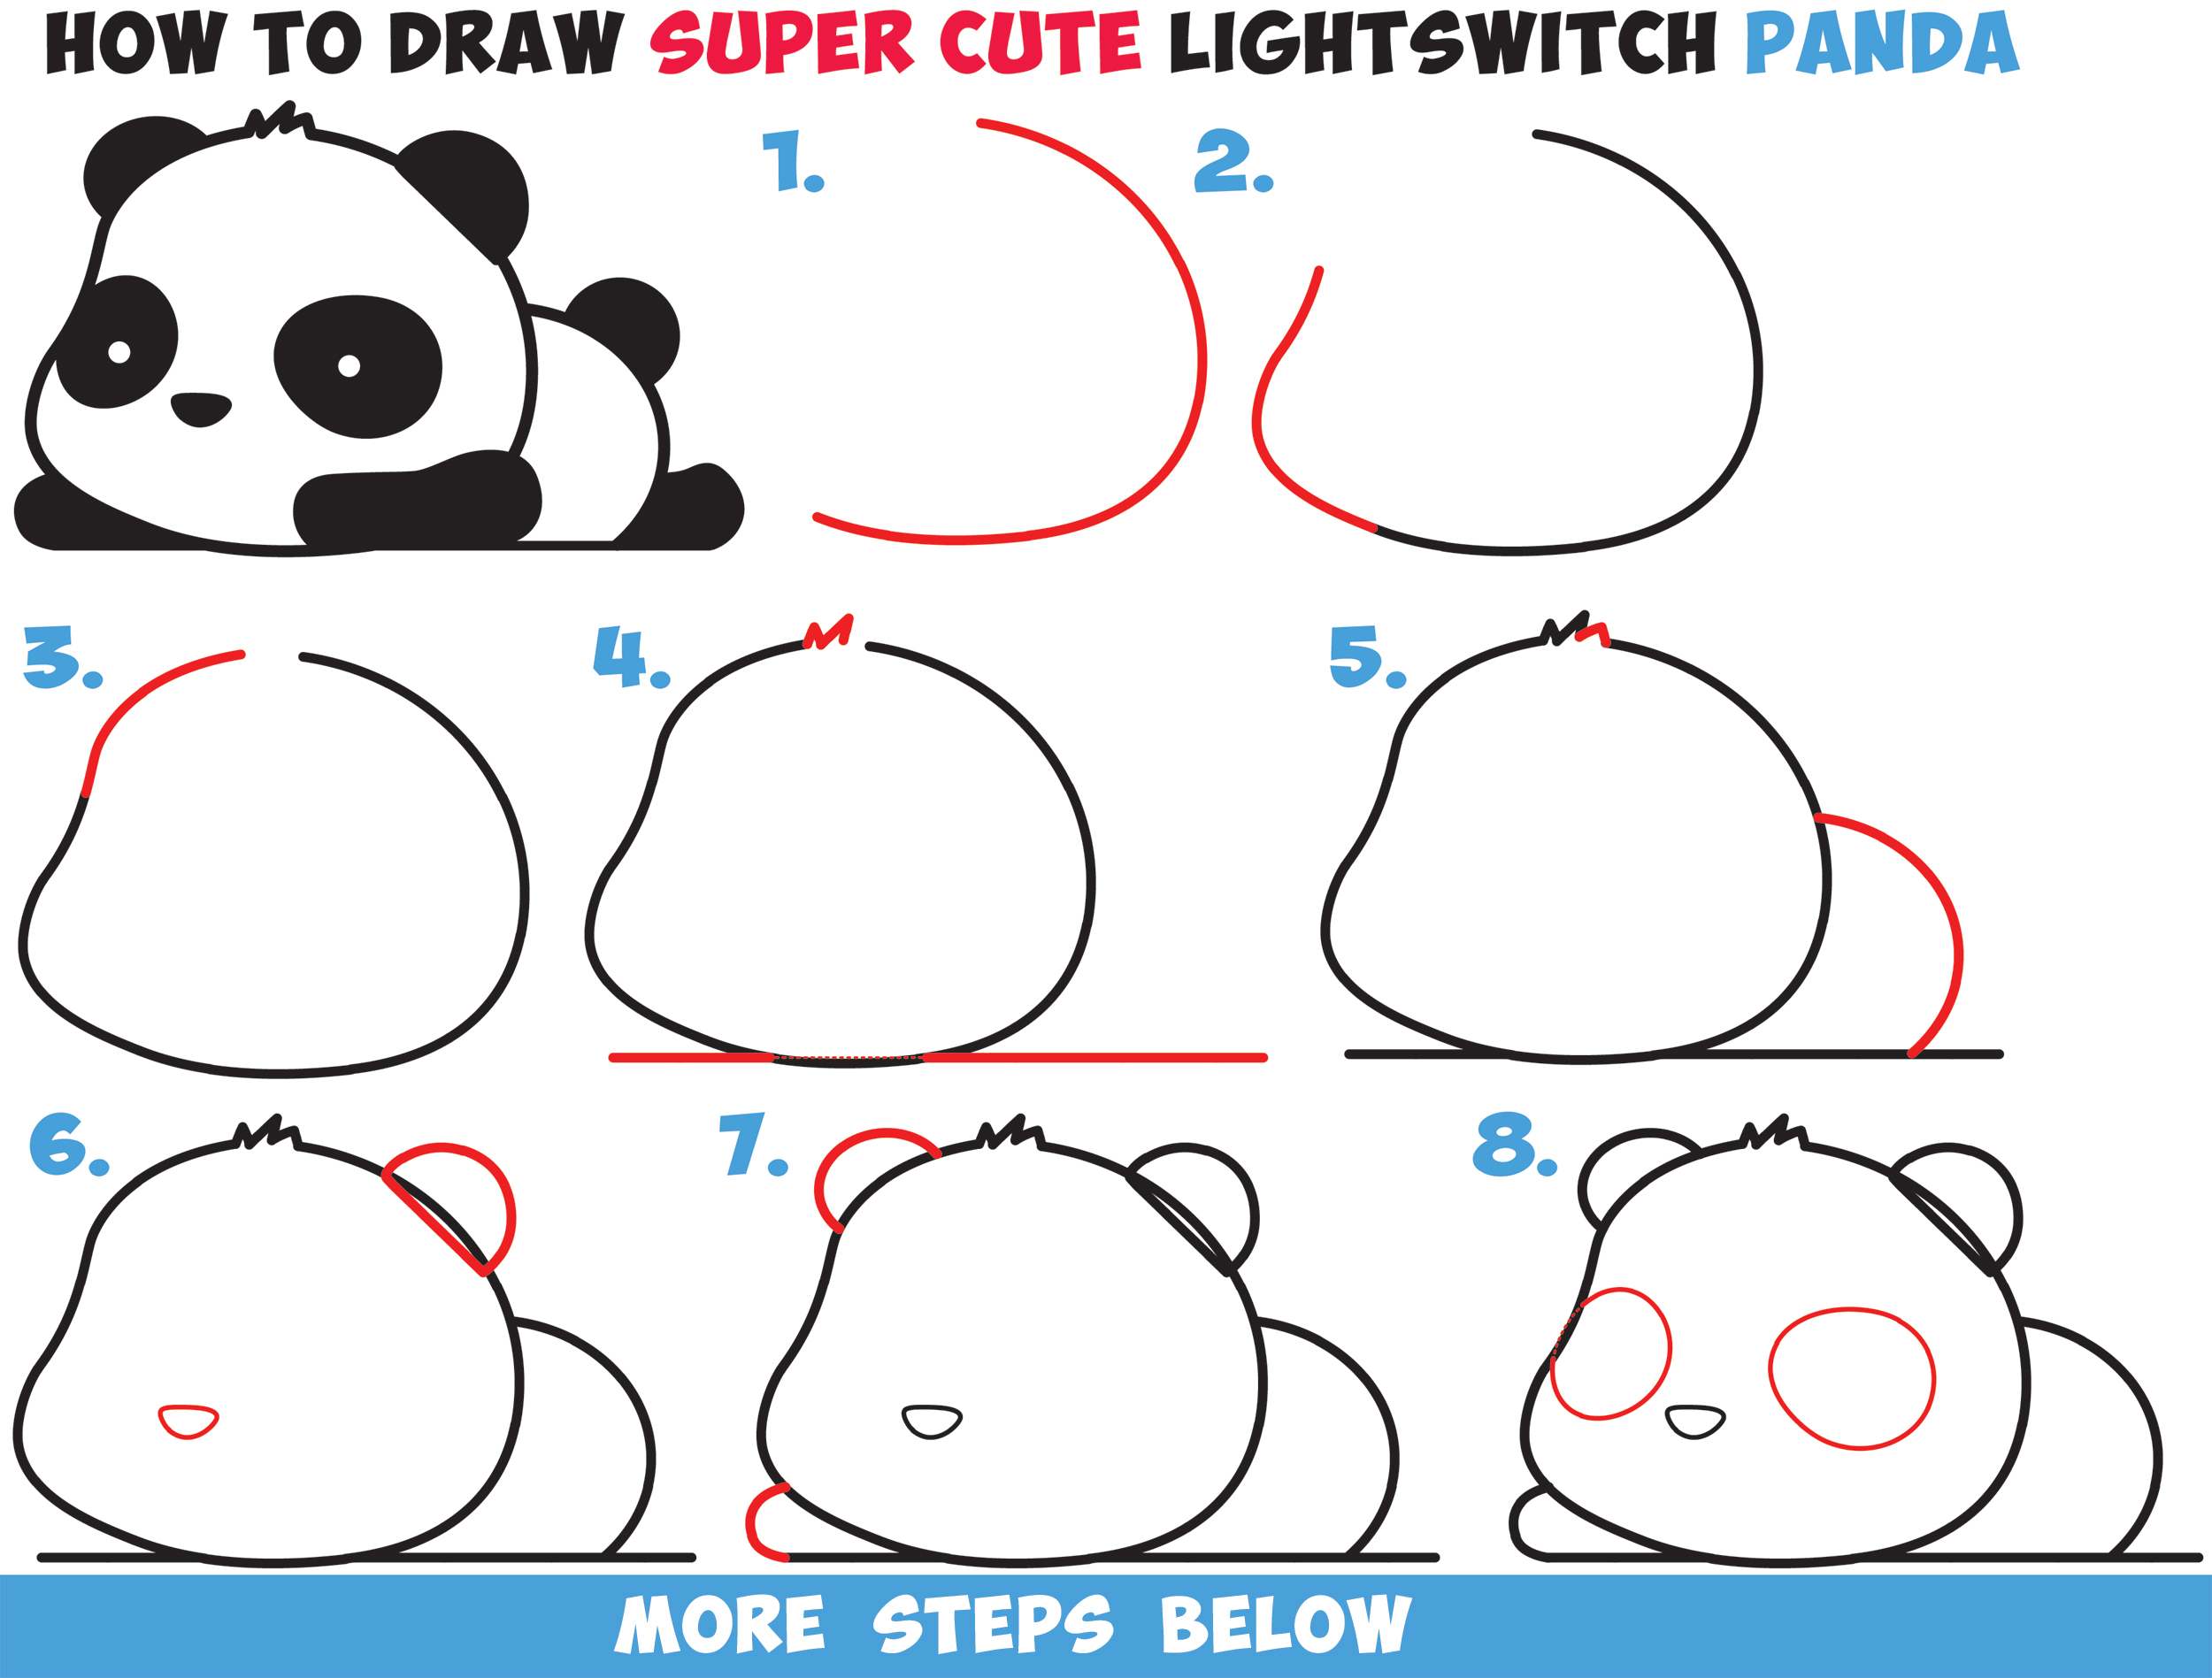 HOW TO DRAW A CUTE PANDA